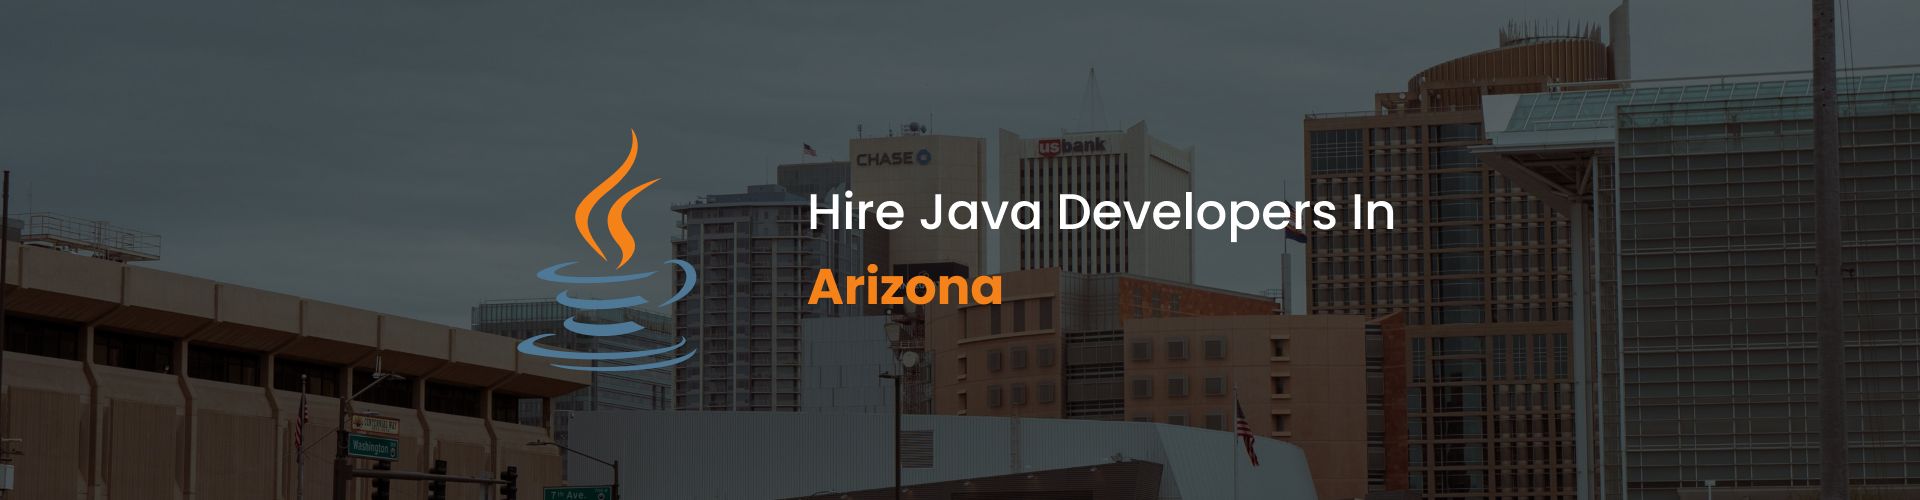 hire java developers in arizona